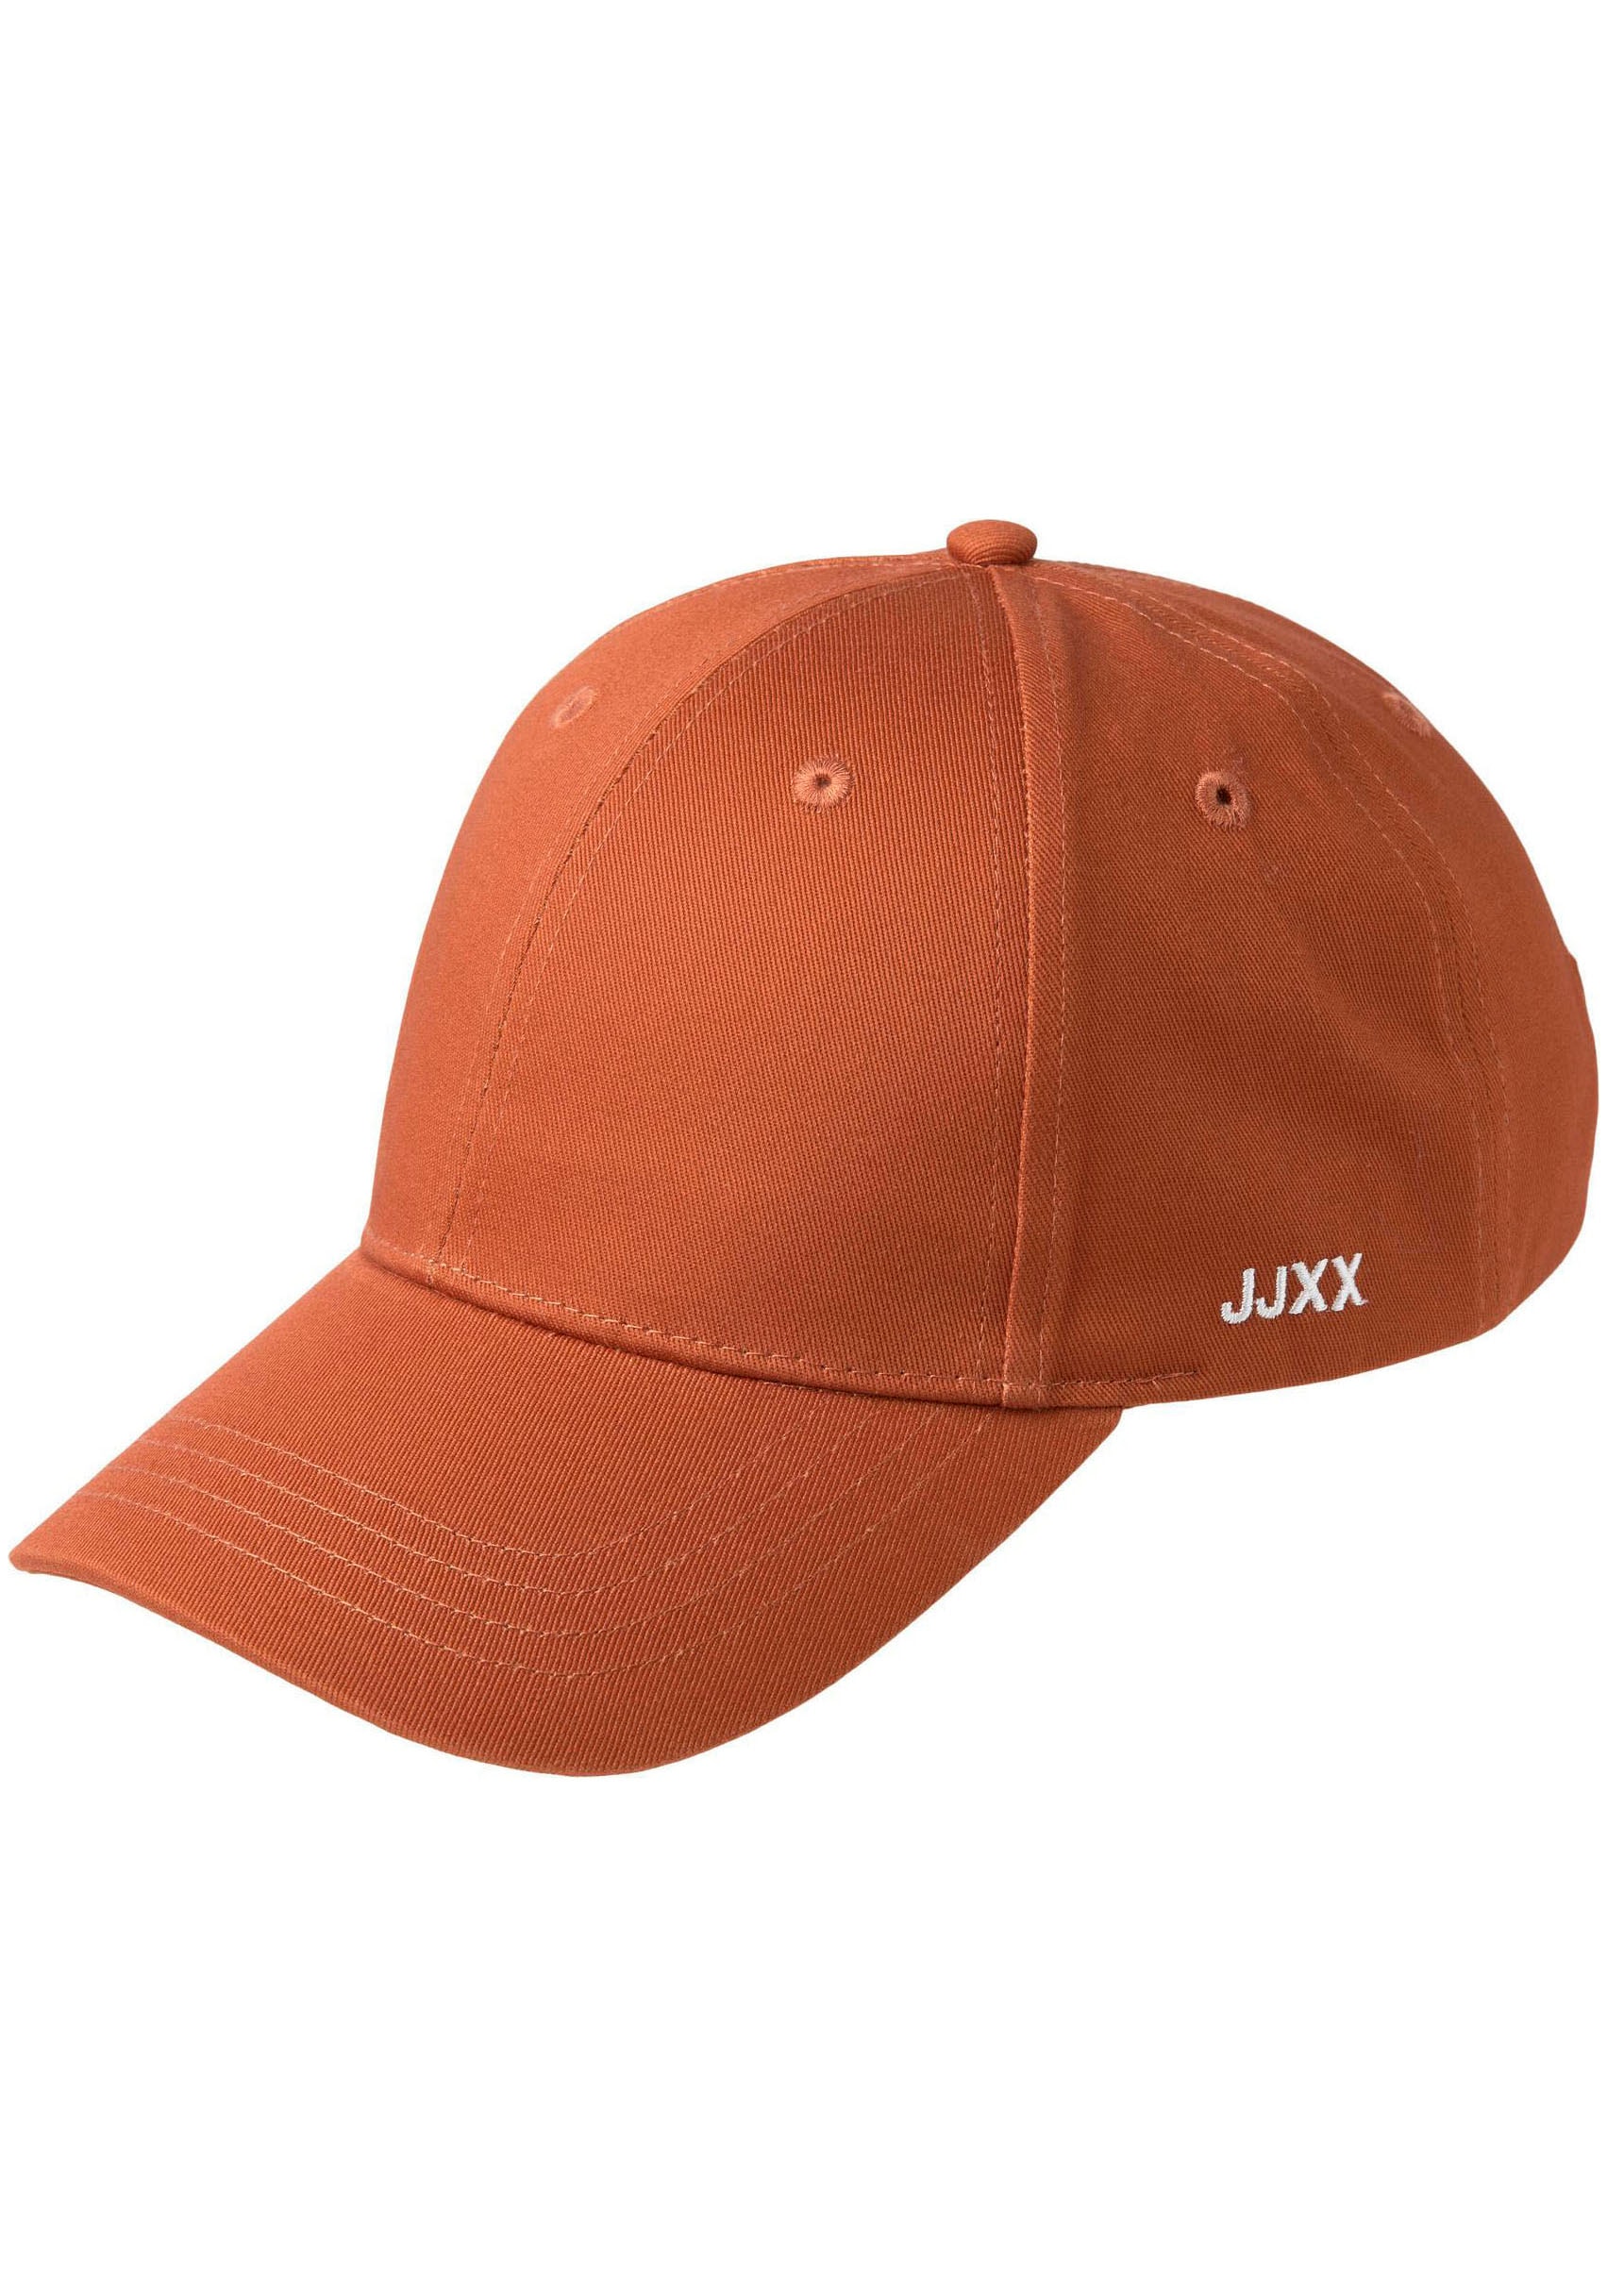 JJXX Baseball NOOS« SMALL BASEBALL online »JXBASIC Cap LOGO bestellen ACC CAP